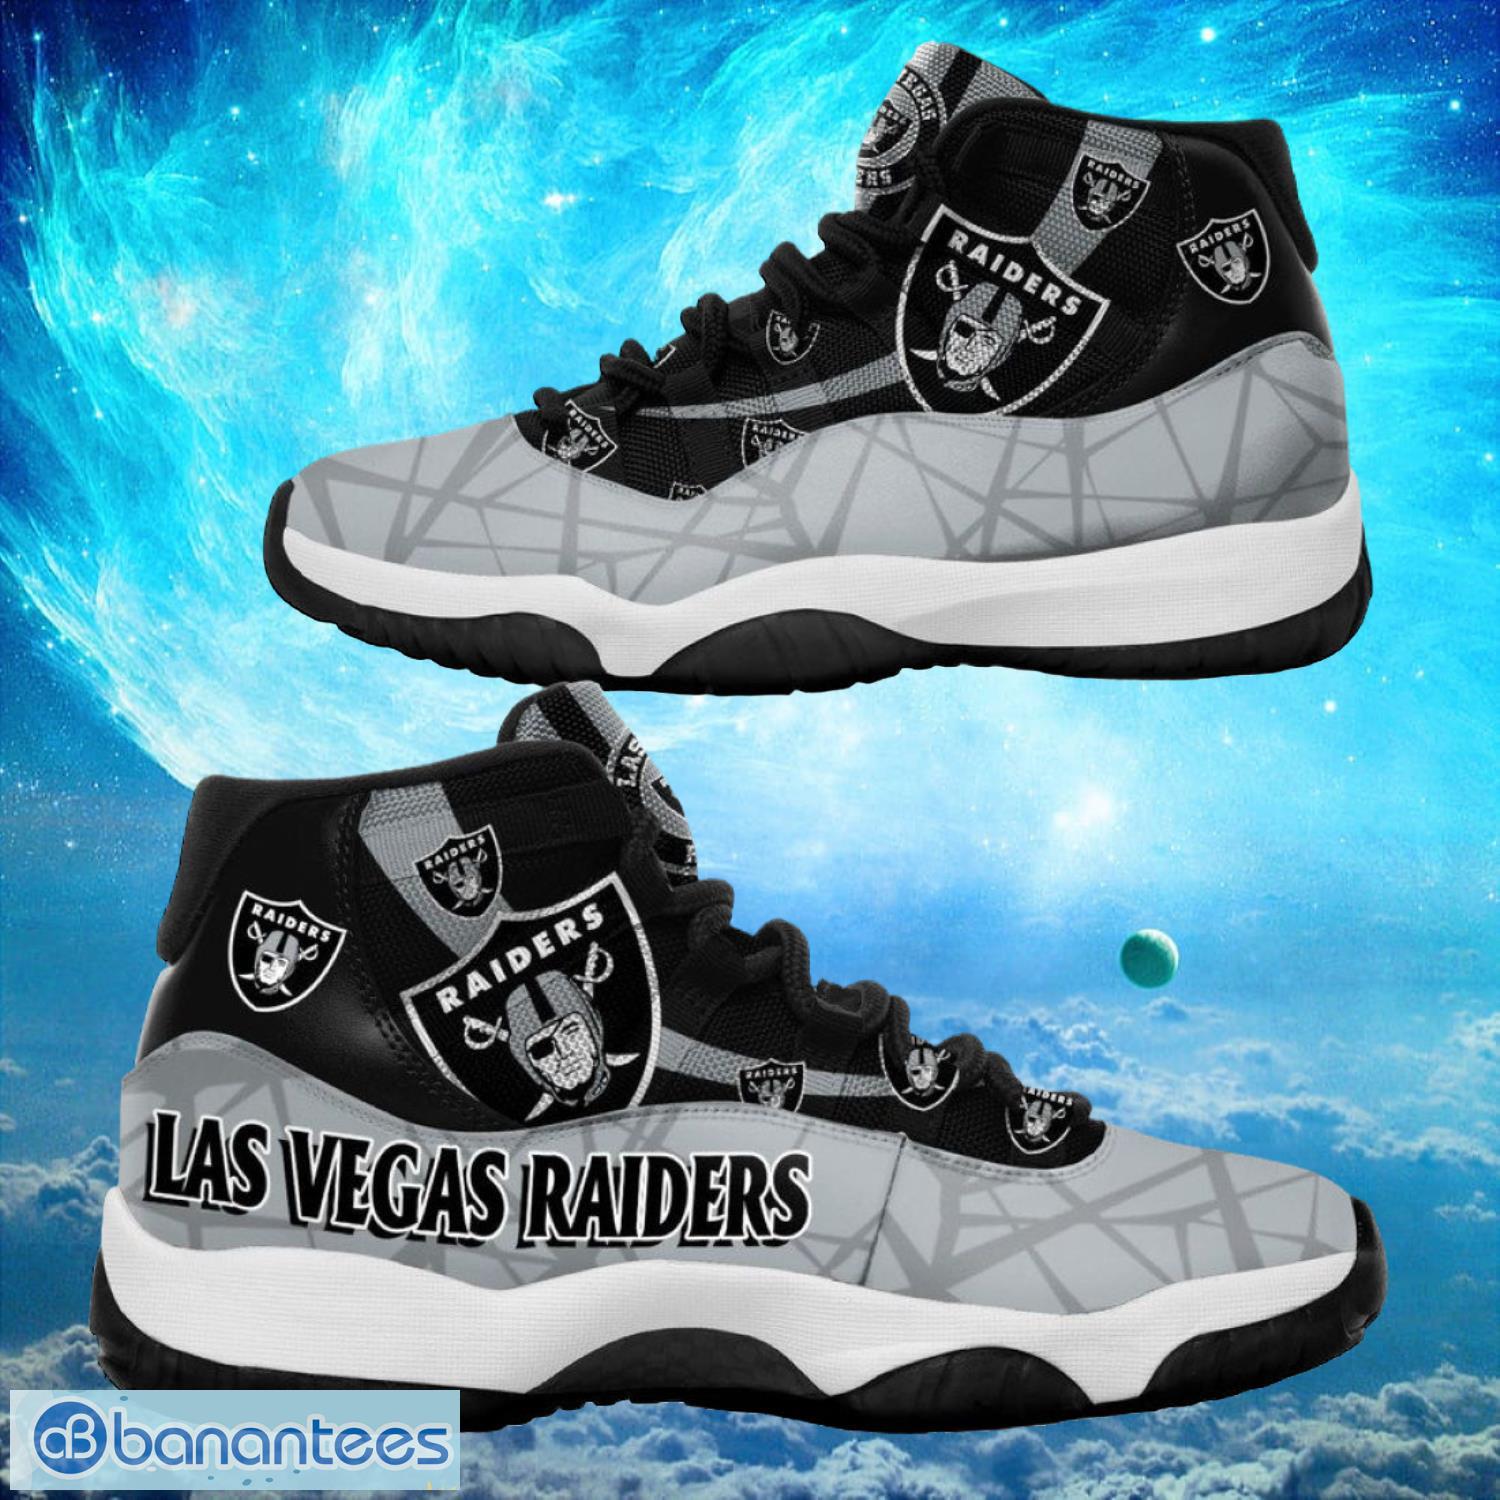 Las Vegas Raiders NFL Air Jordan 11 Sneakers Shoes Gift For Fans Product Photo 1